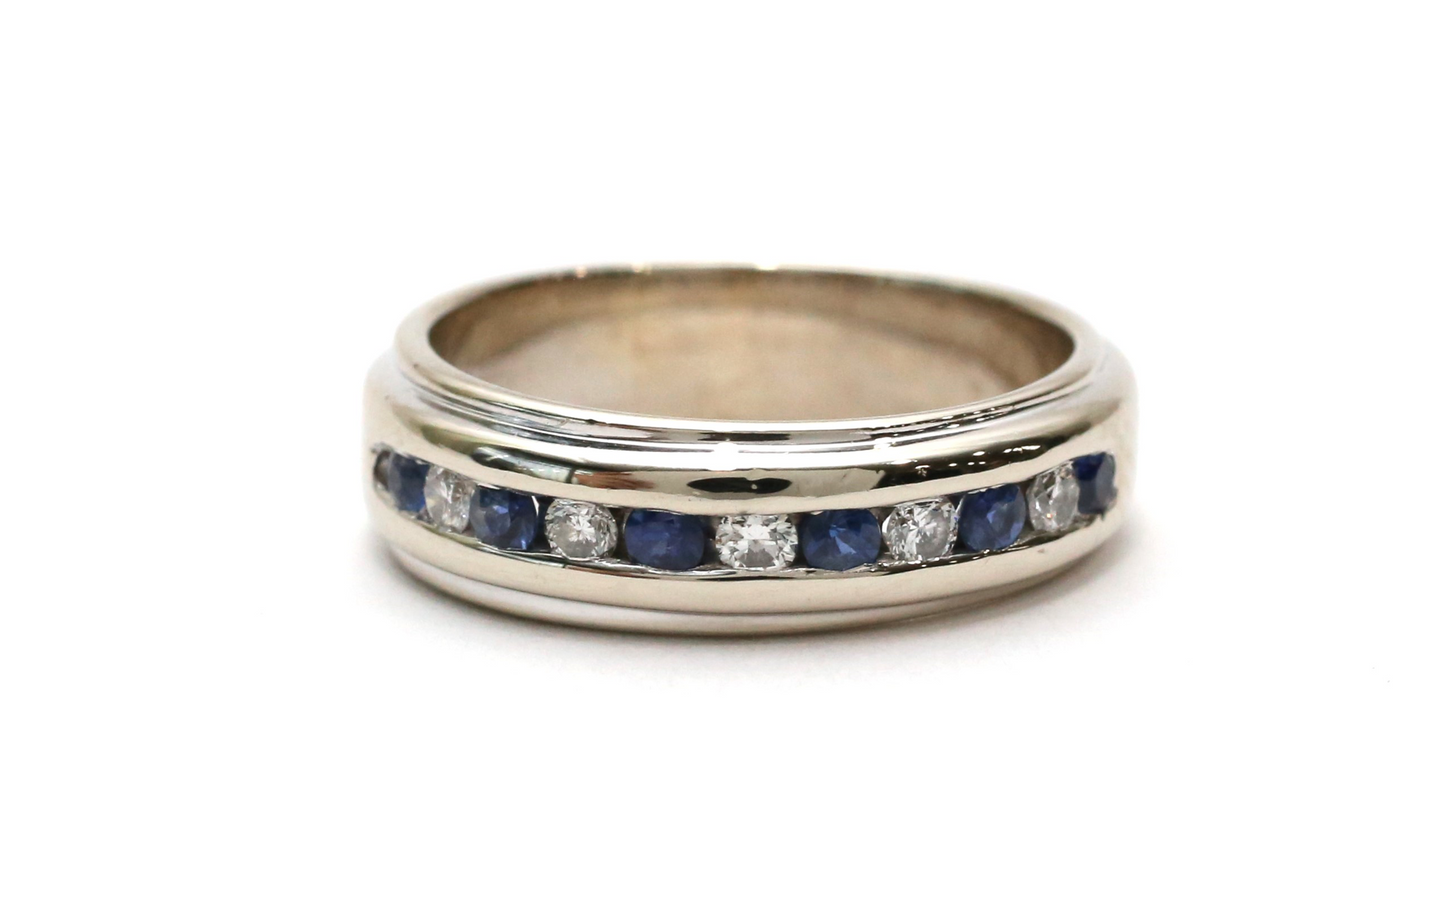 14k White Gold Sapphire & Diamond Ring, Size 7.75 - 6.5g